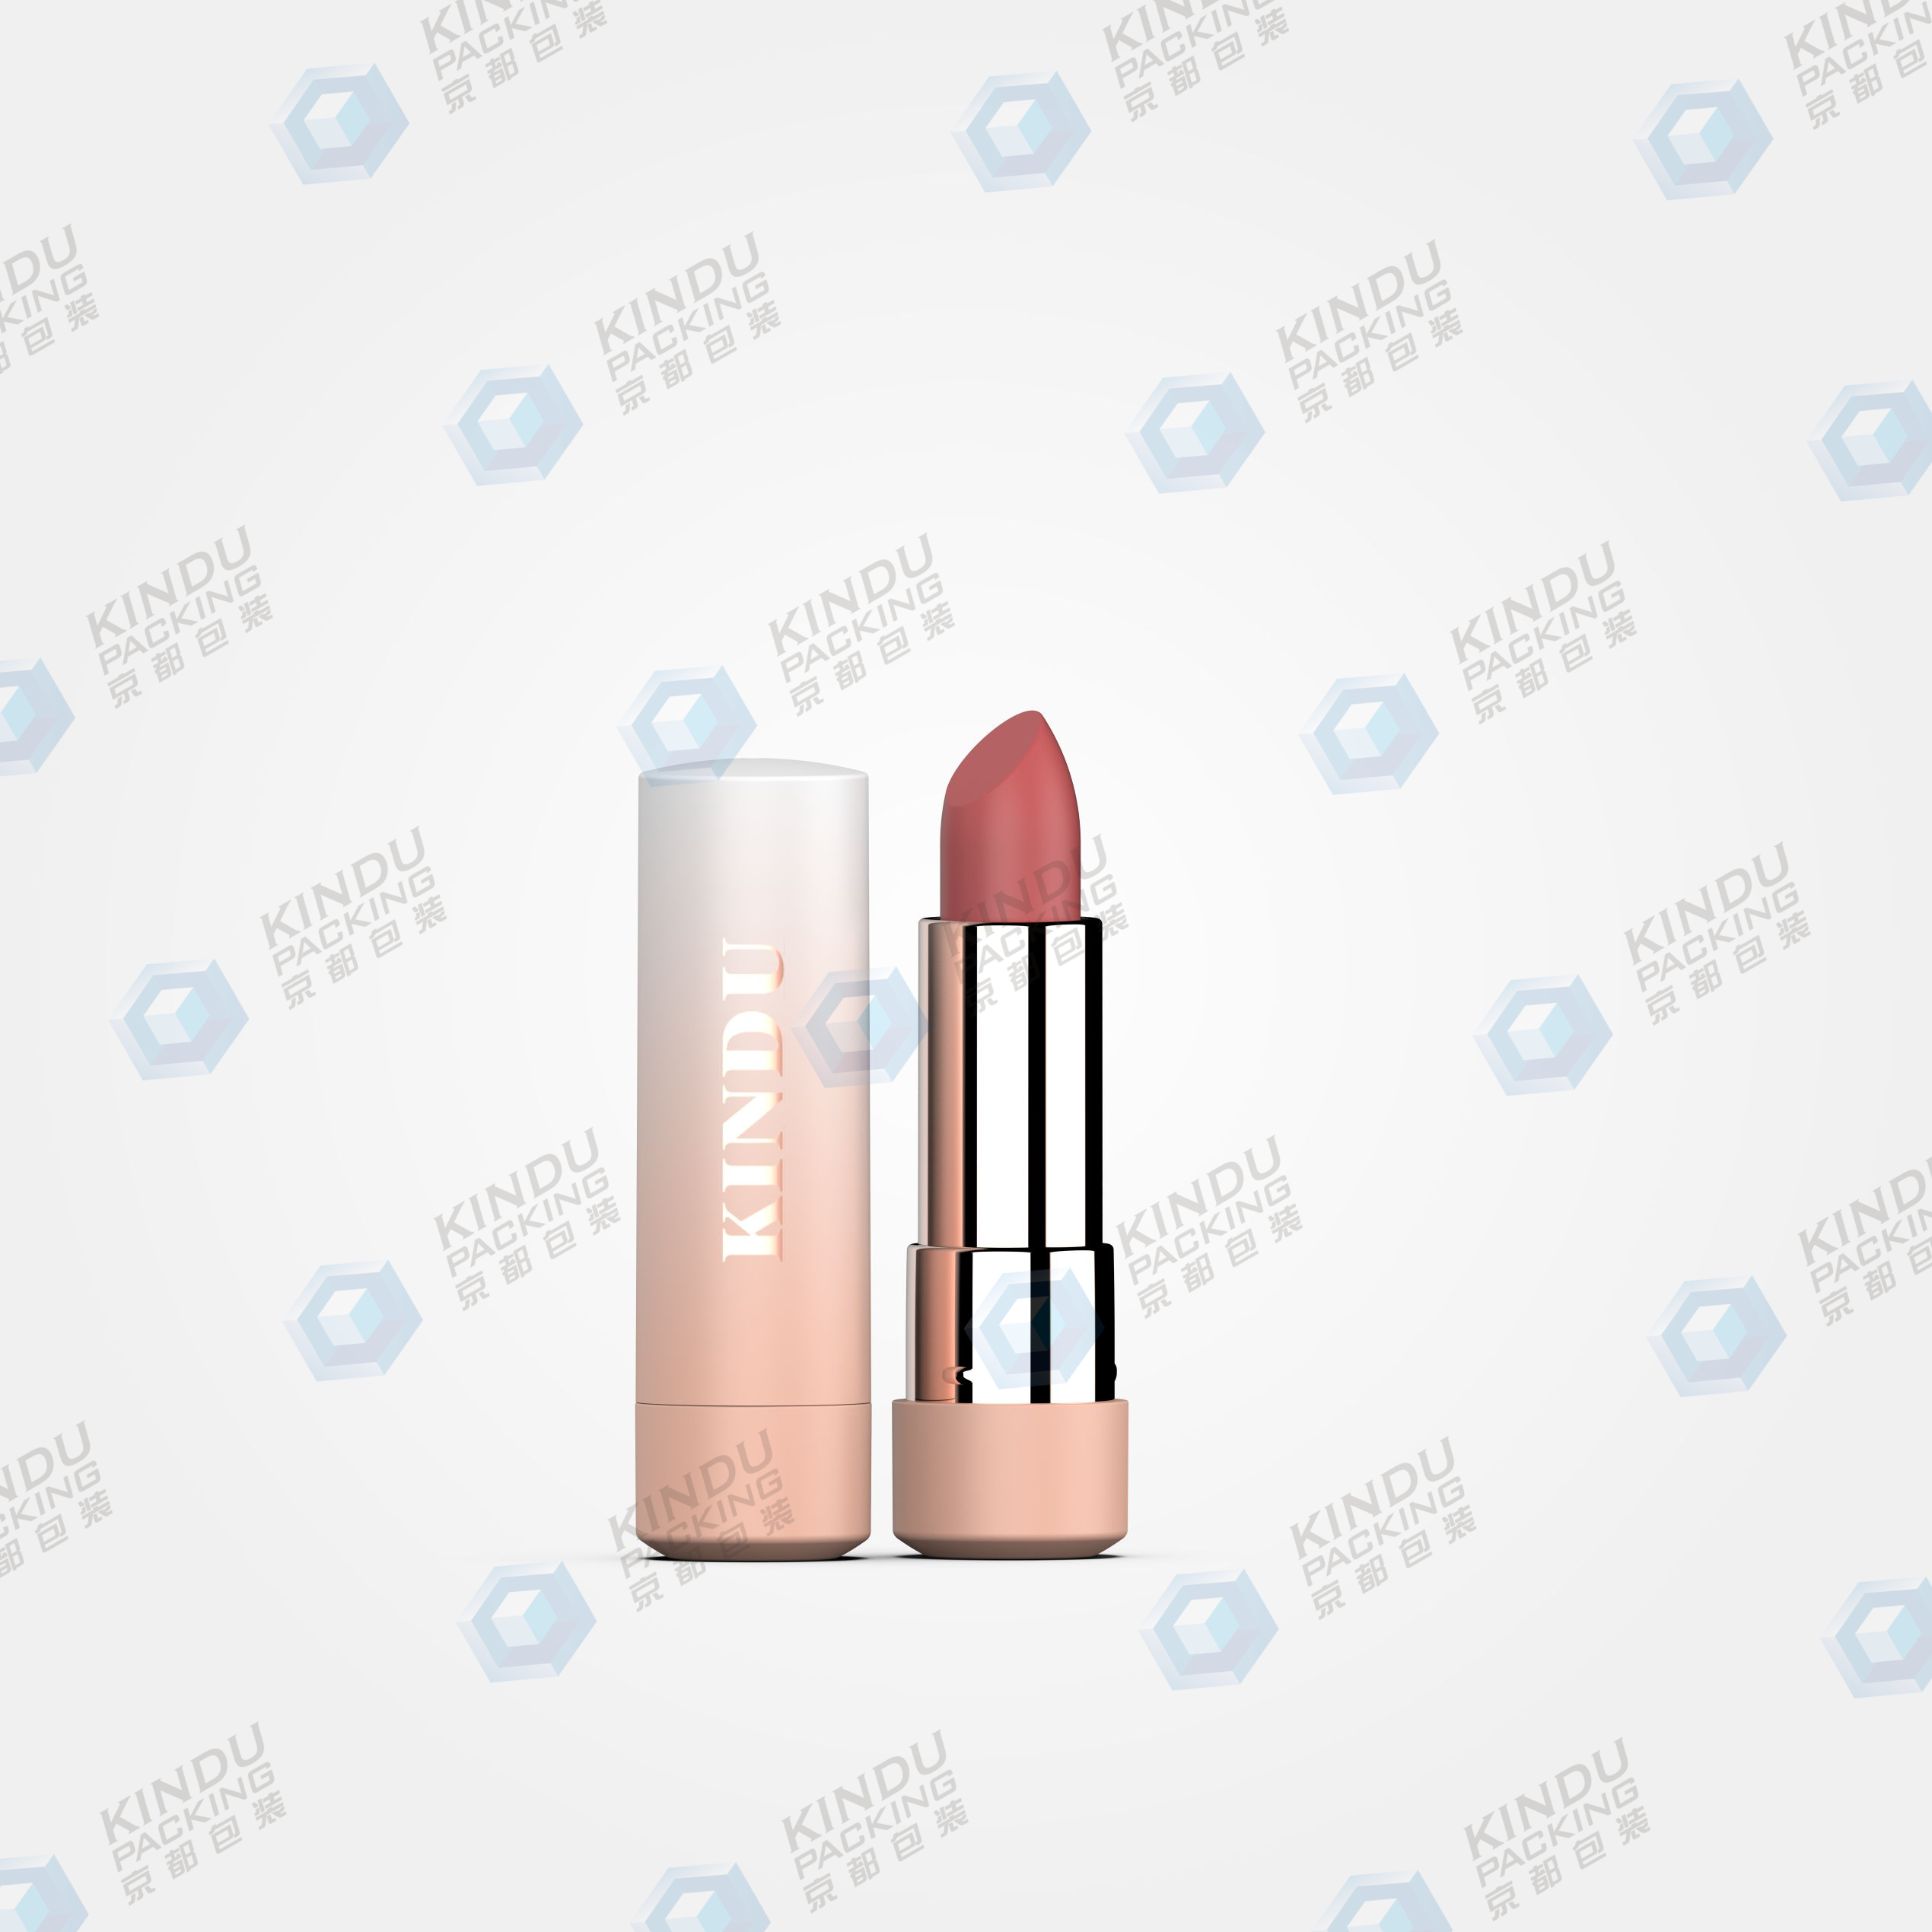 Round lipstick packaging (ZH-K0159)